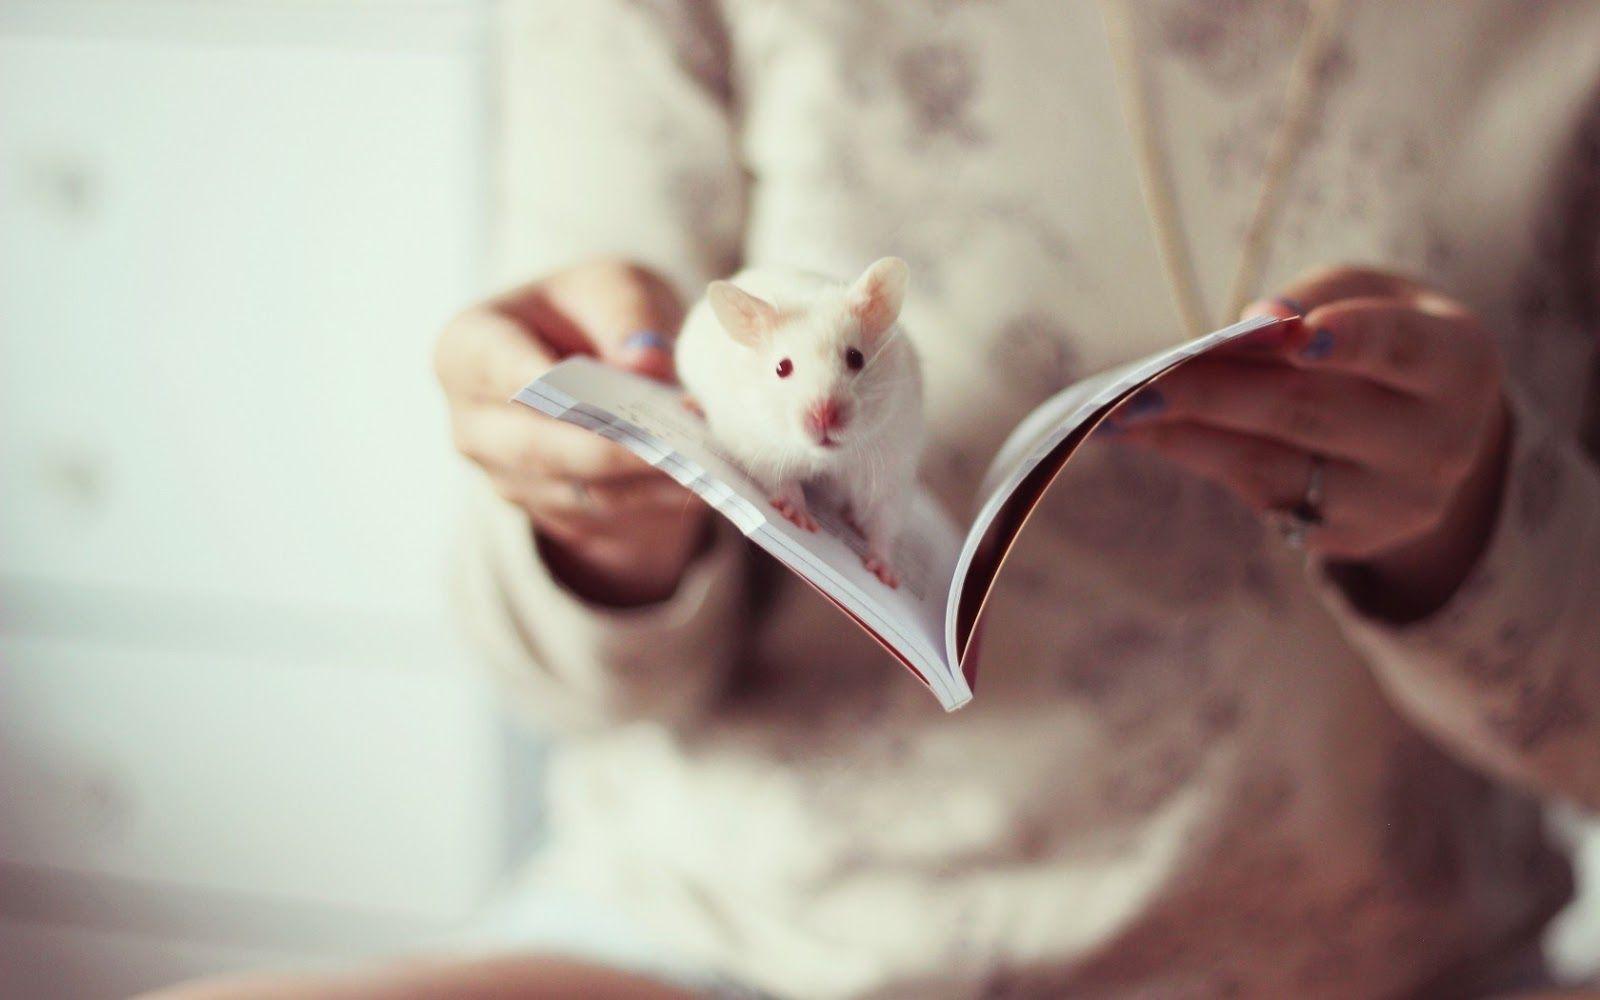 White Rat Wallpaper, Image, Photo, Picture & Pics #white #rat